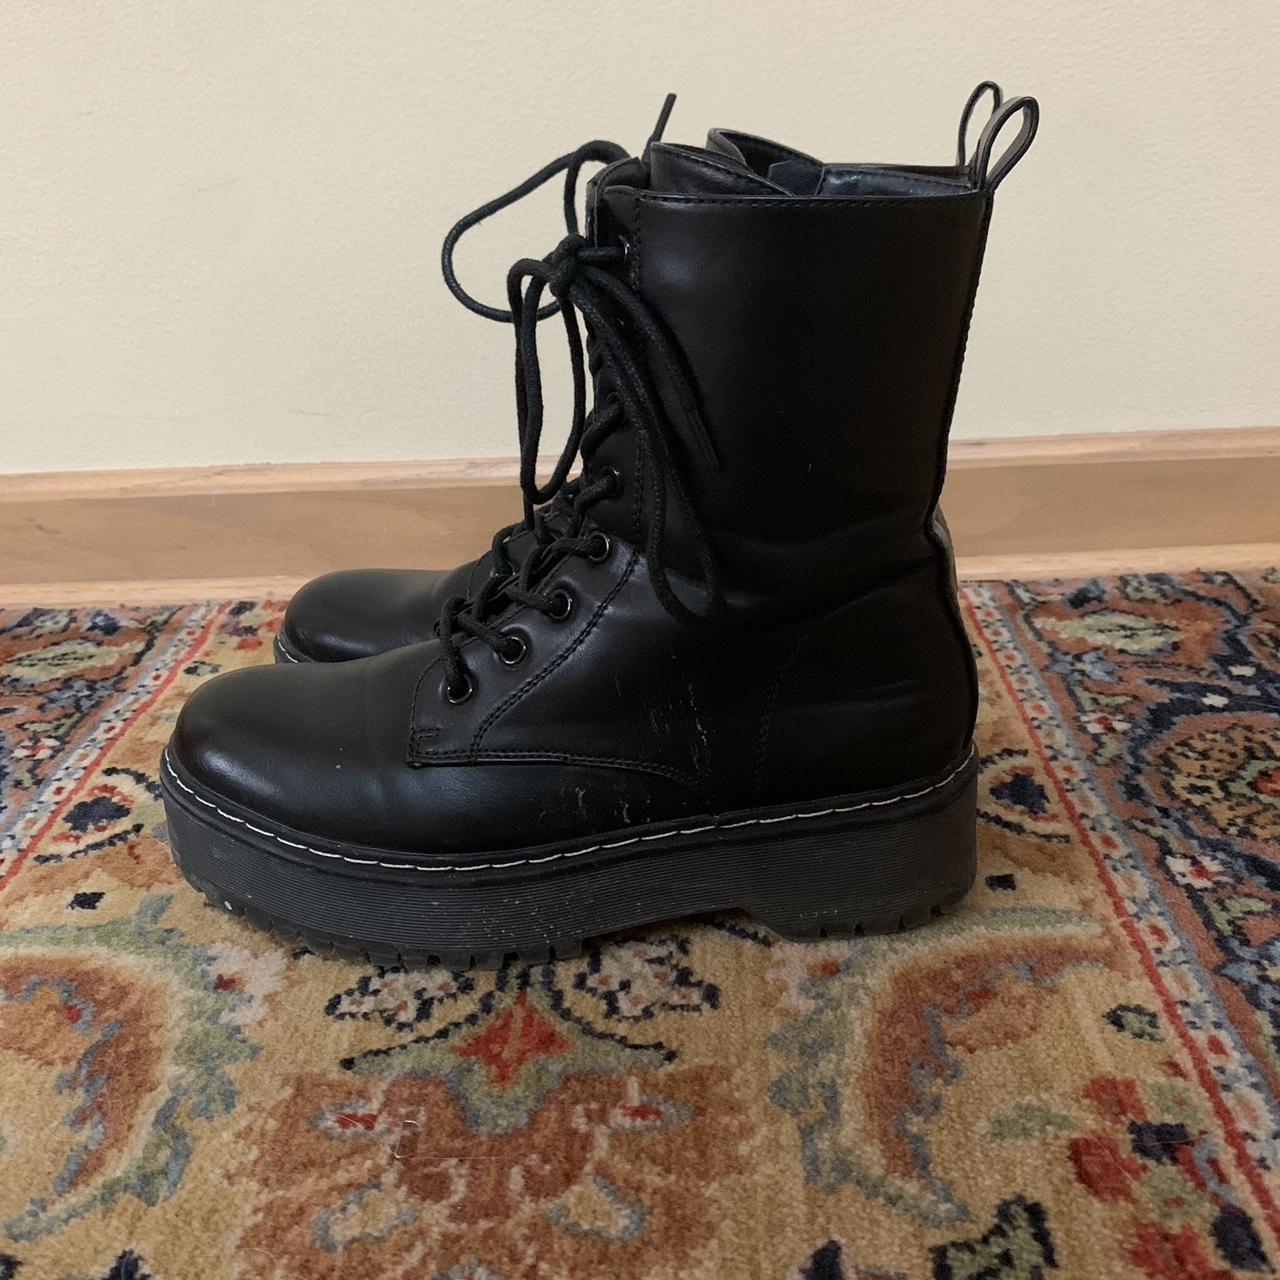 Union Bay Women's Black Boots (2)